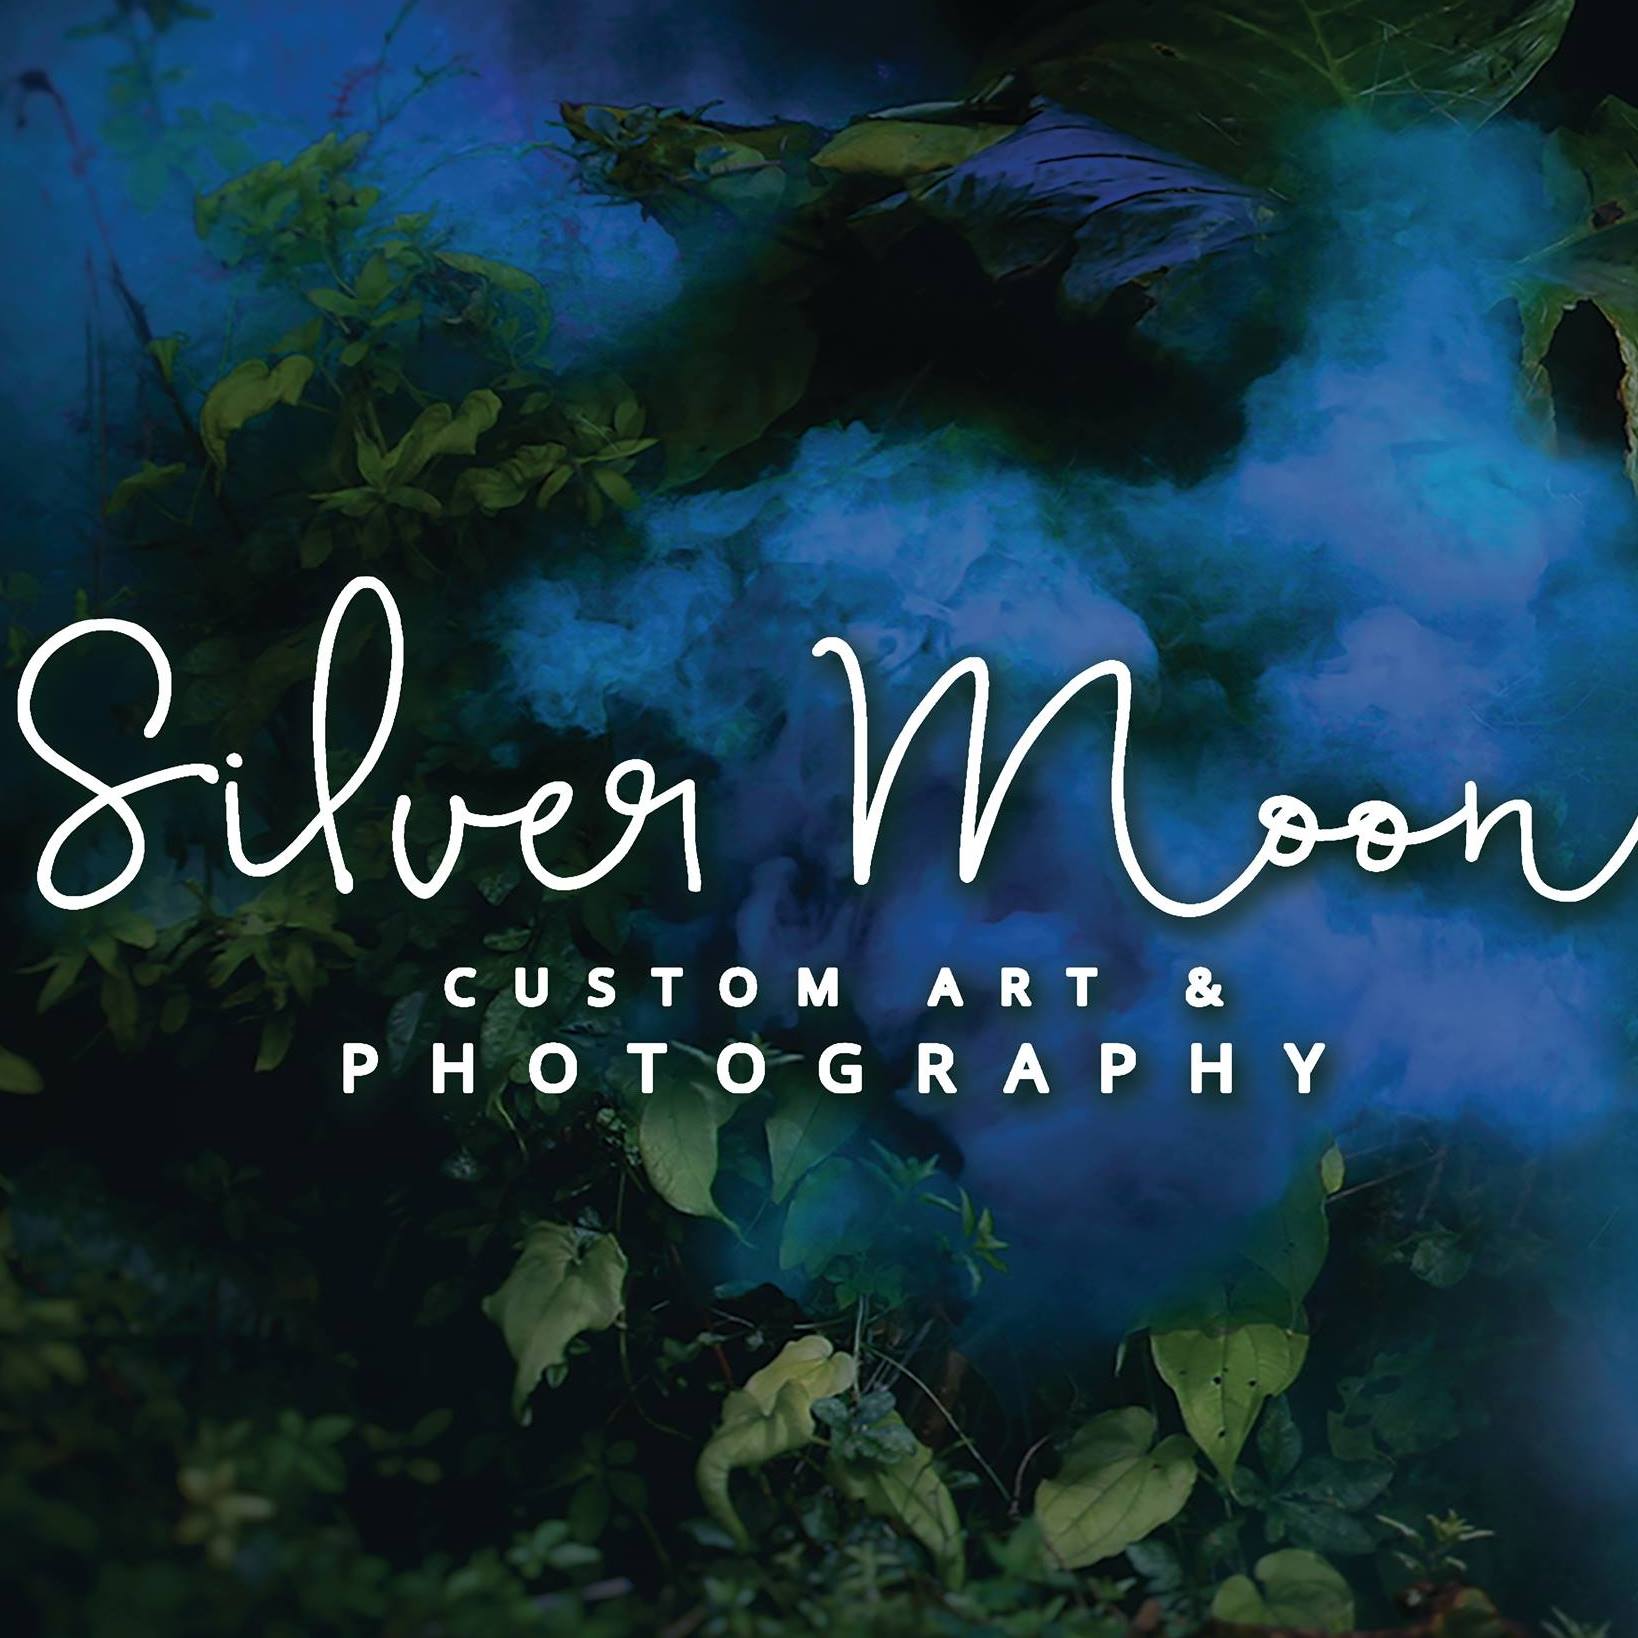 Silver Moon Custom Art & Photography